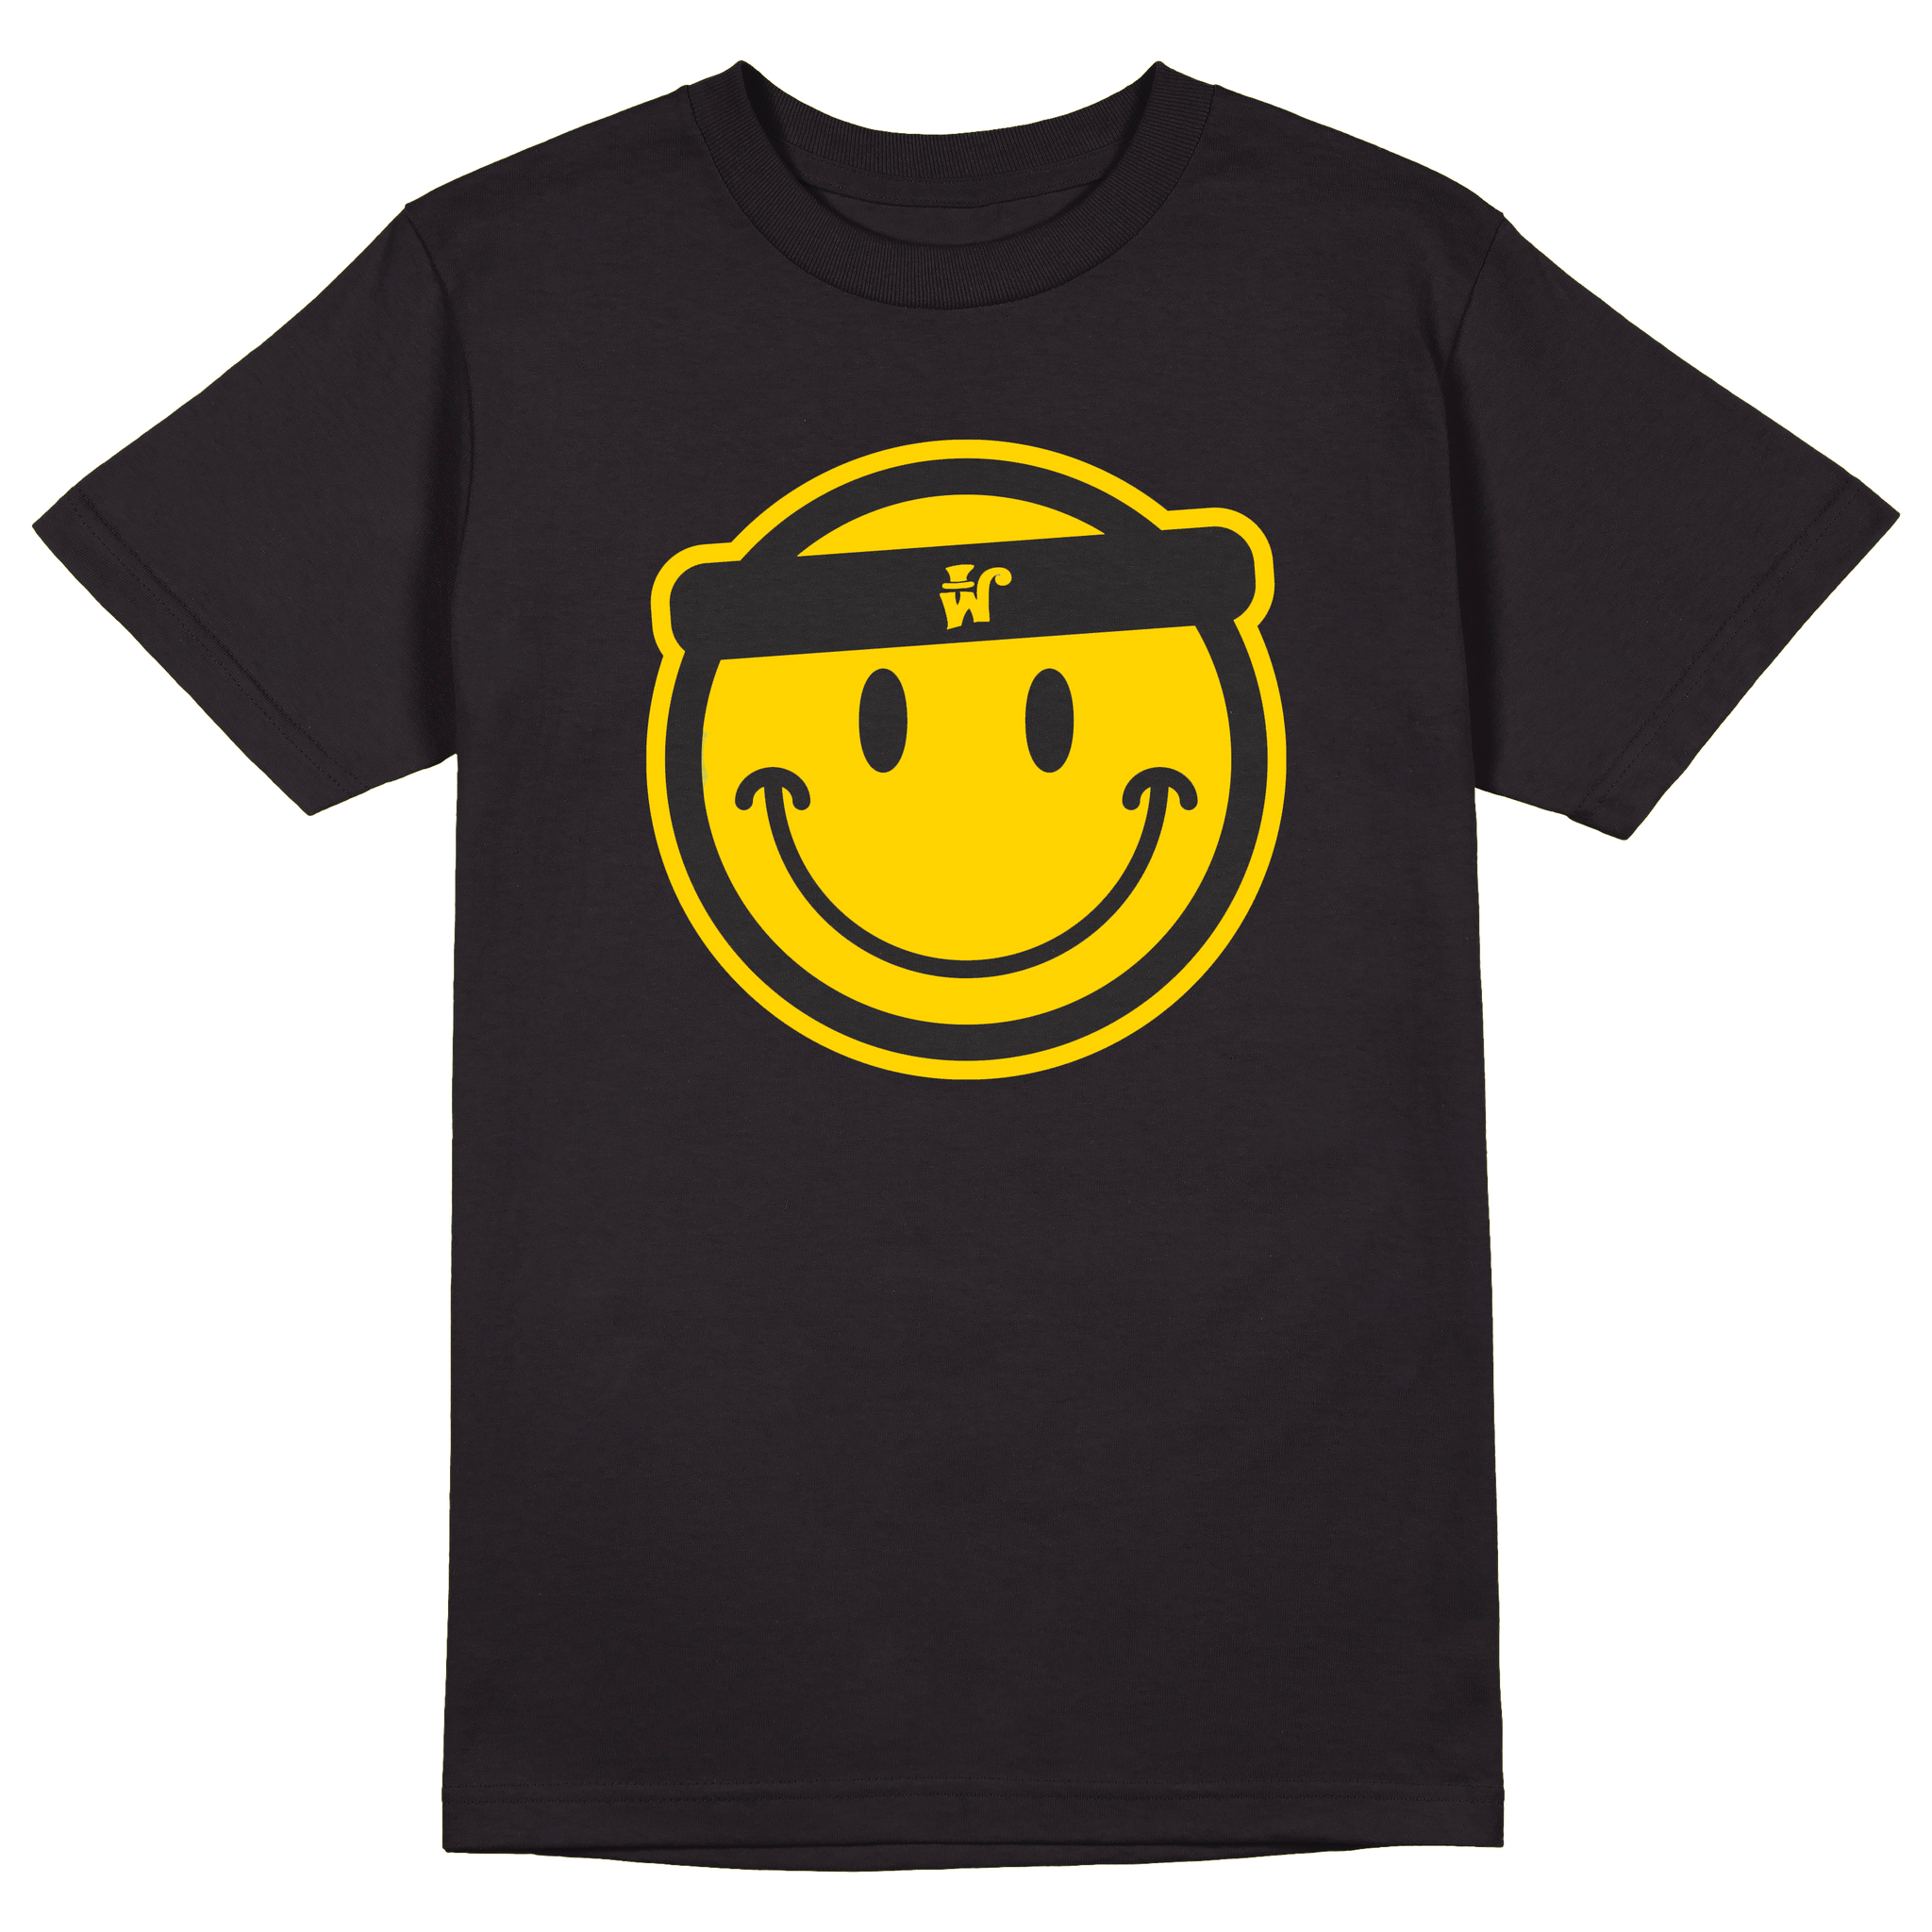 WILLIE WONKA "Smile" T-Shirt